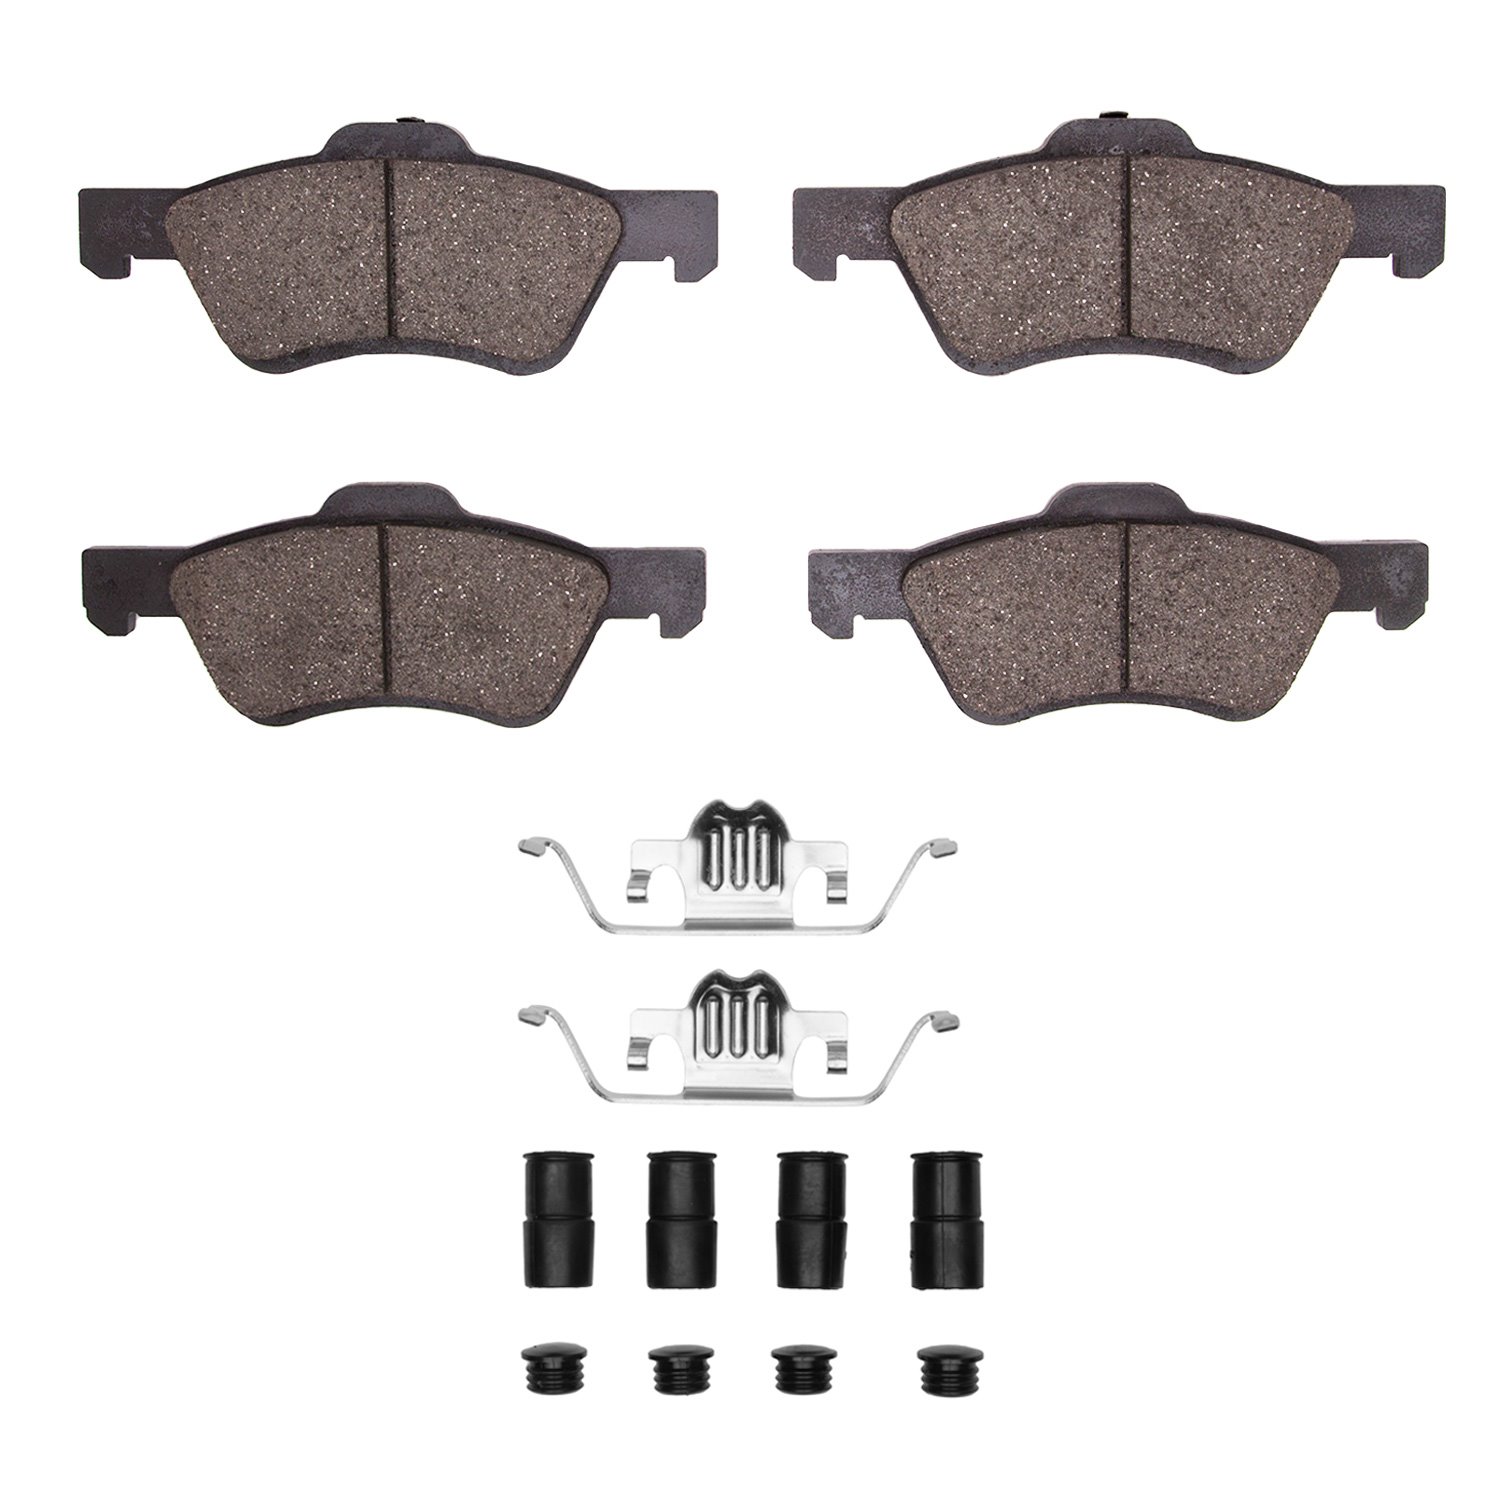 1310-1047-01 3000-Series Ceramic Brake Pads & Hardware Kit, 2005-2012 Ford/Lincoln/Mercury/Mazda, Position: Front